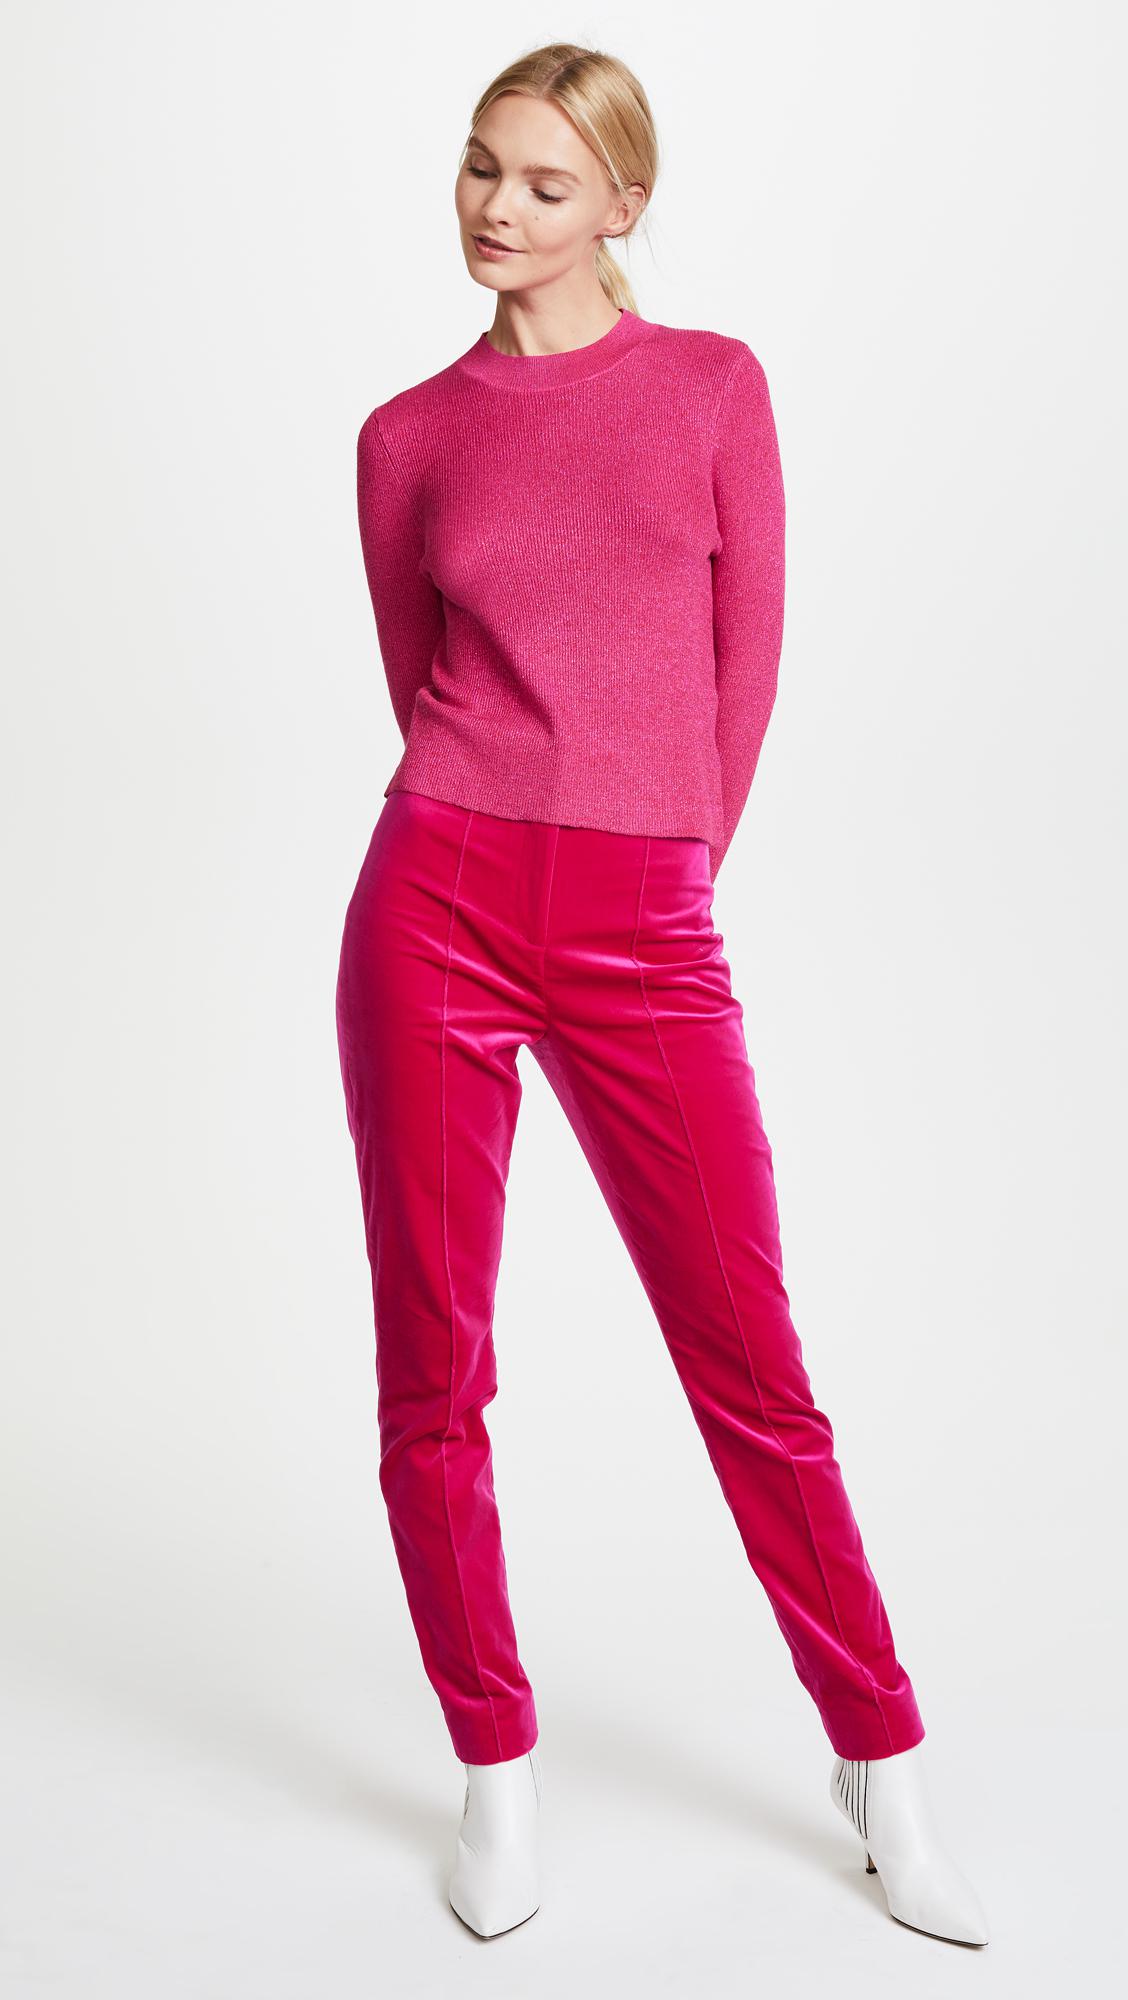 Lyst - Glamorous Metallic Knit Sweater in Pink